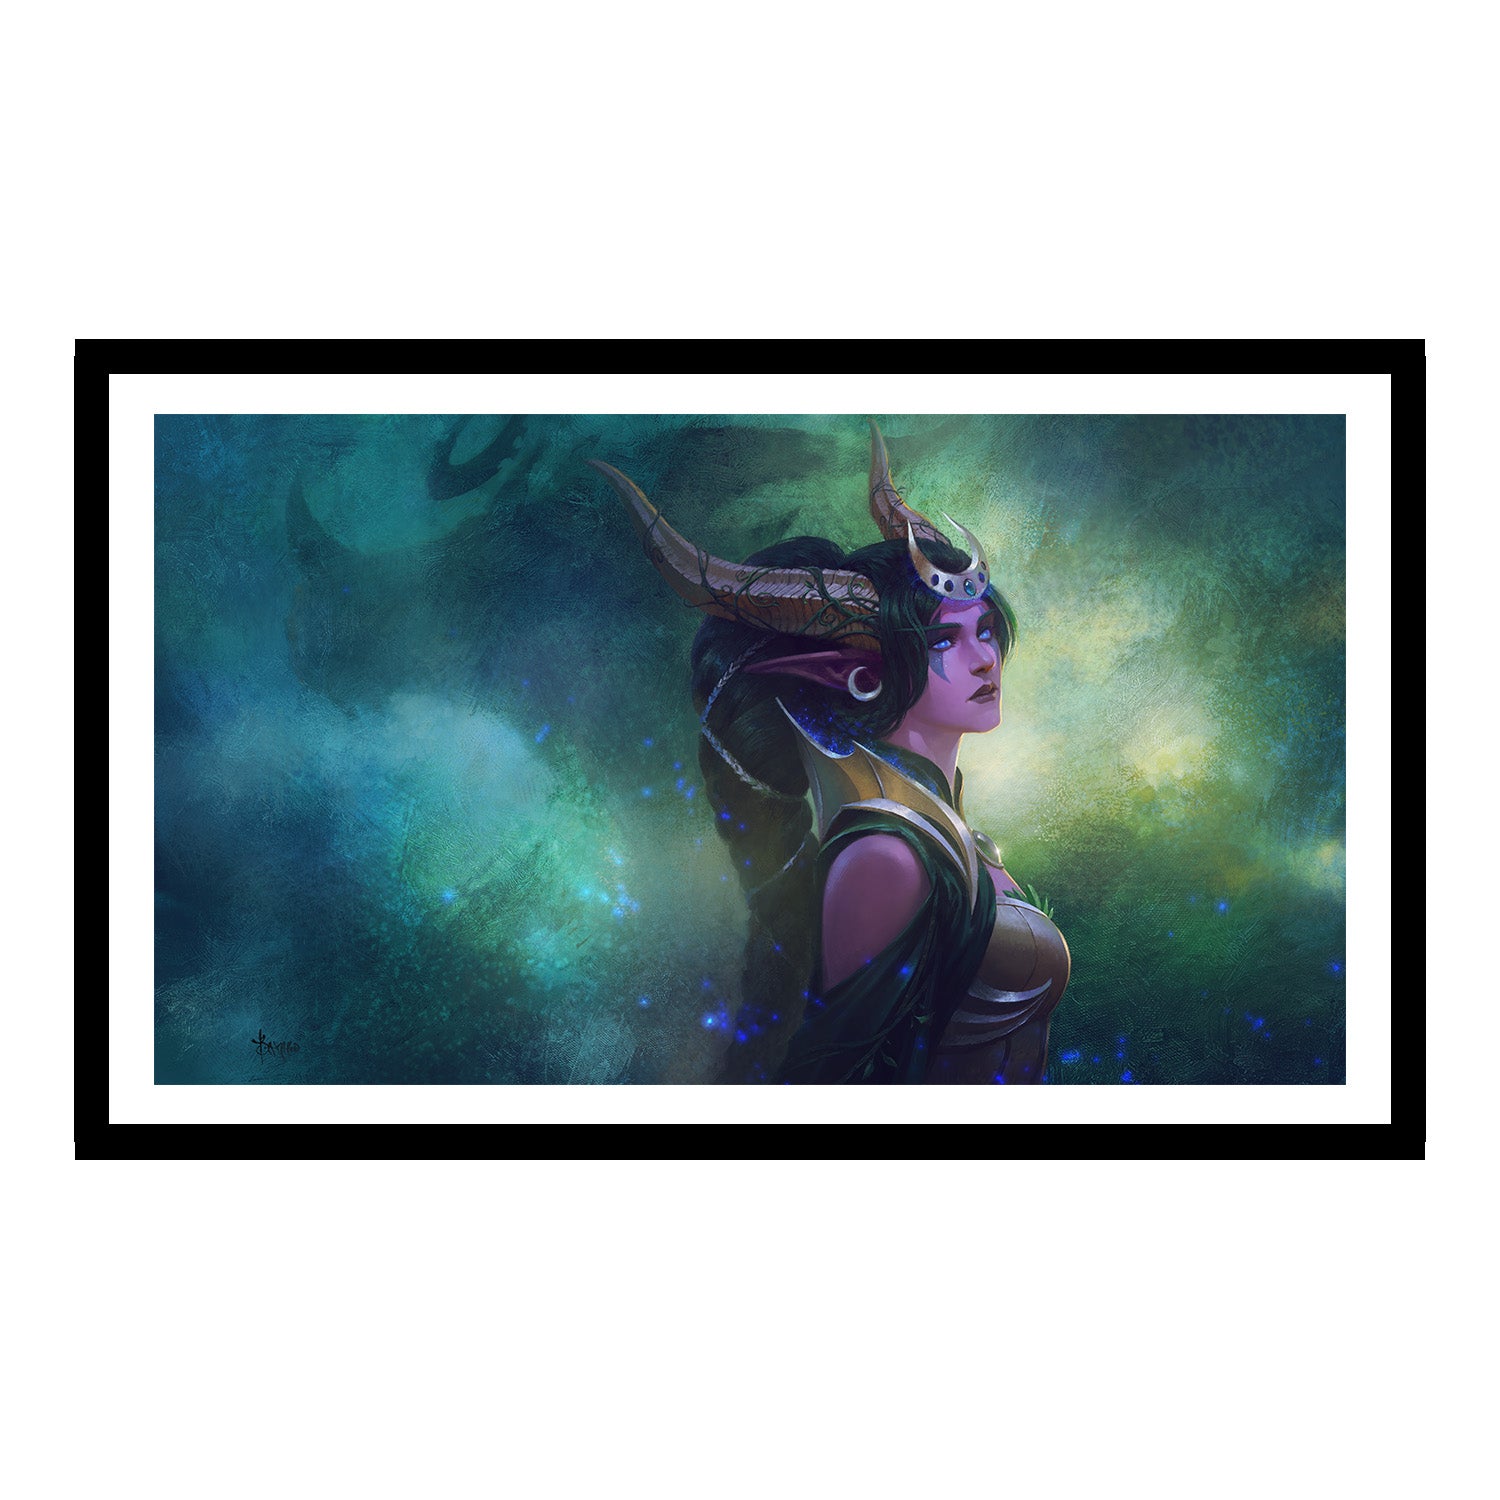 World of Warcraft Ysera 30.5 x 43.4 cm Framed Art Print - Front View